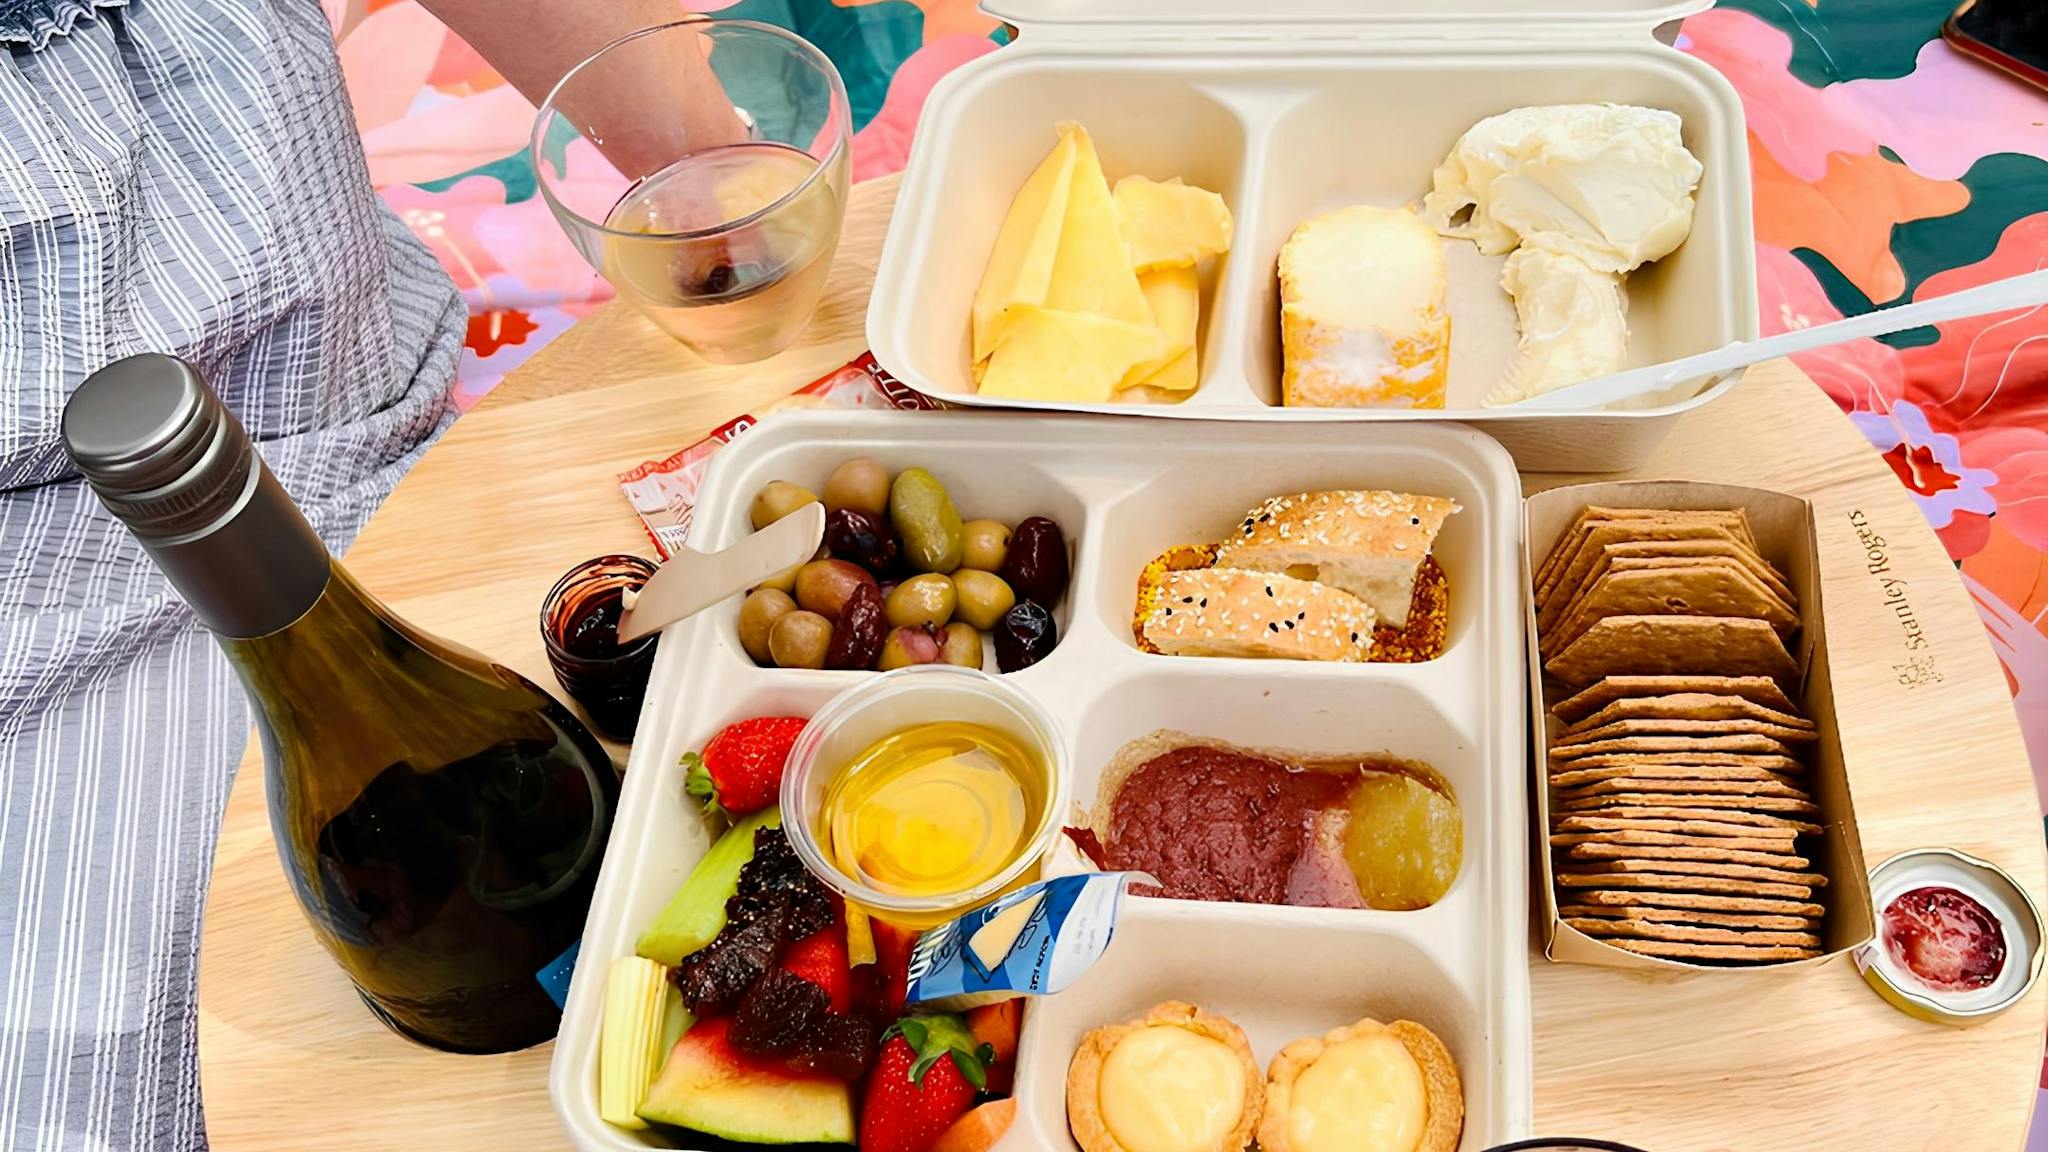 Pre-order your picnic platter